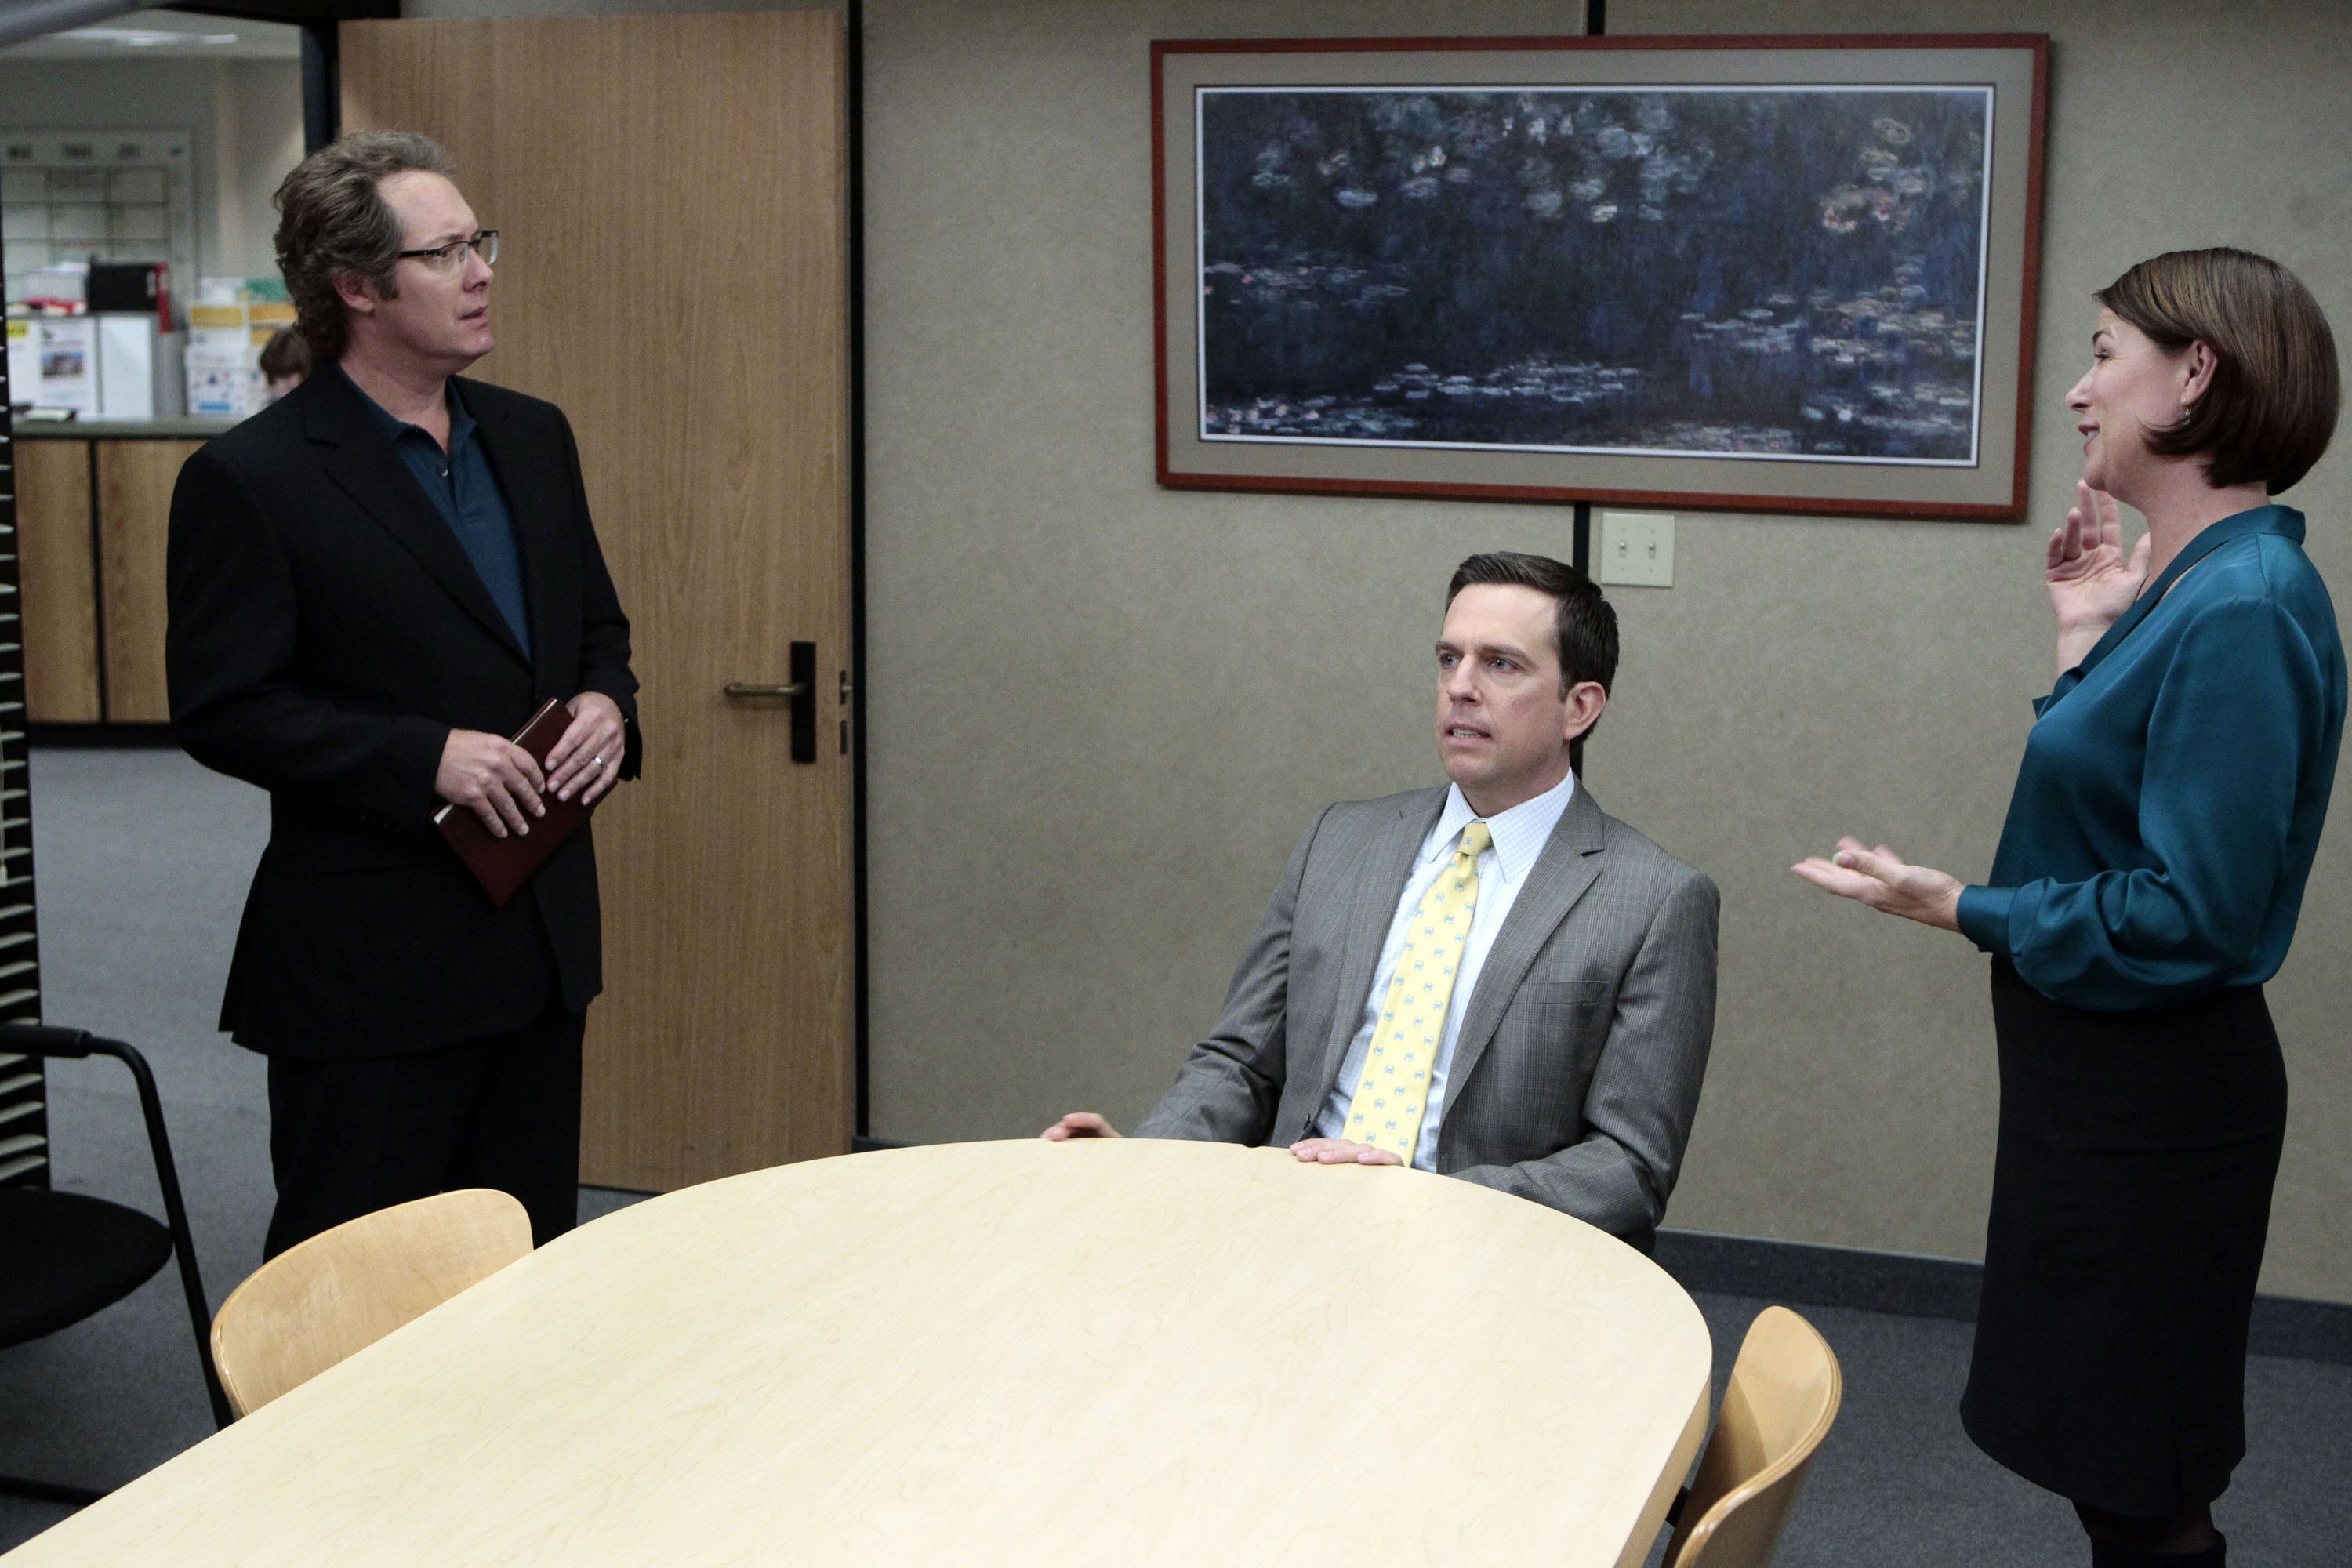 James Spader as Robert California, Ed Helms as Andy Bernard, Maura Tierney as Susan California in episode 809 of The Office